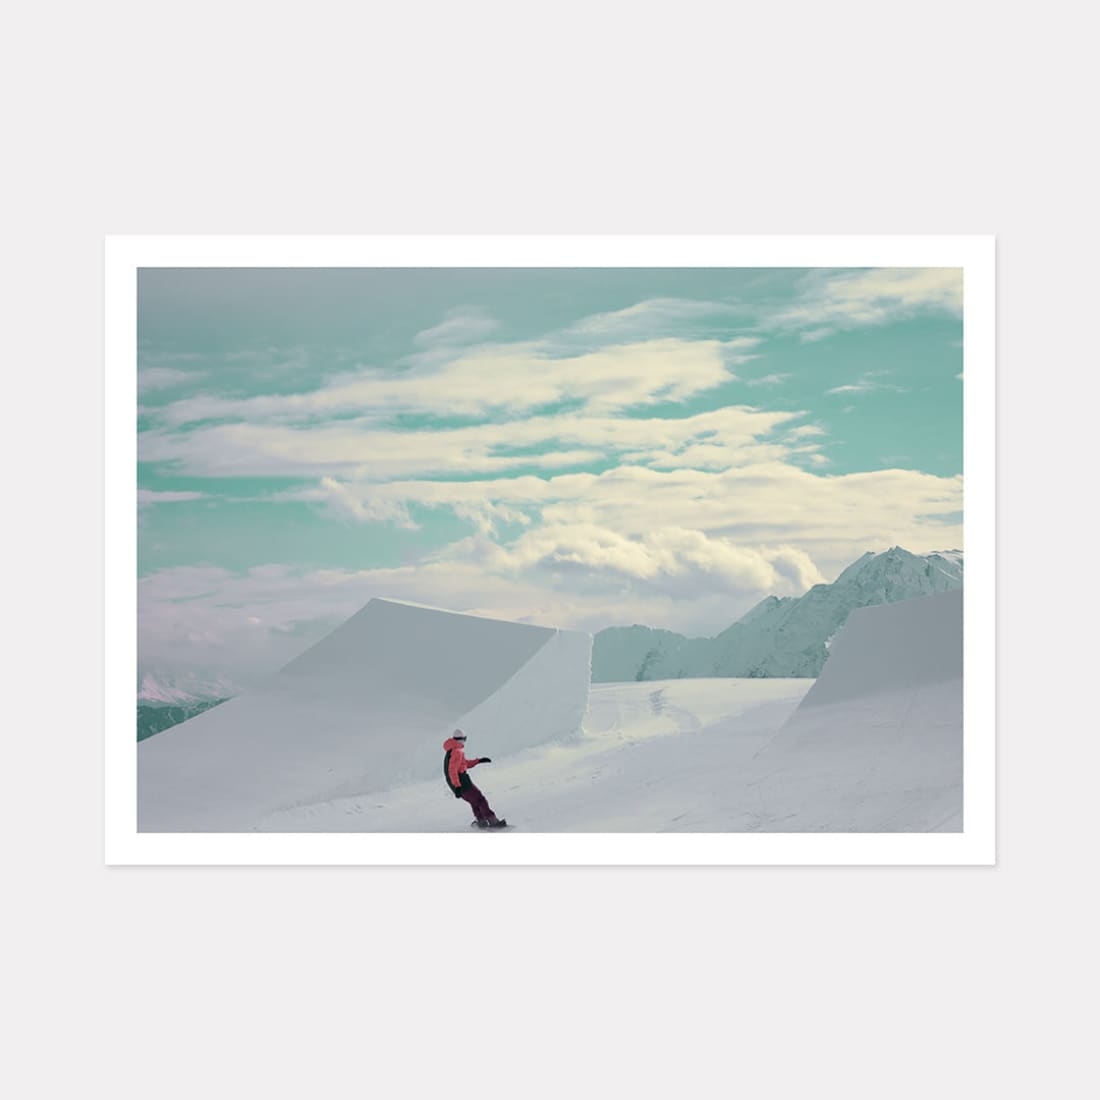 Snowboard Mountain Art Print, A3 (42cm x 29.7cm) unframed print – Powderhound